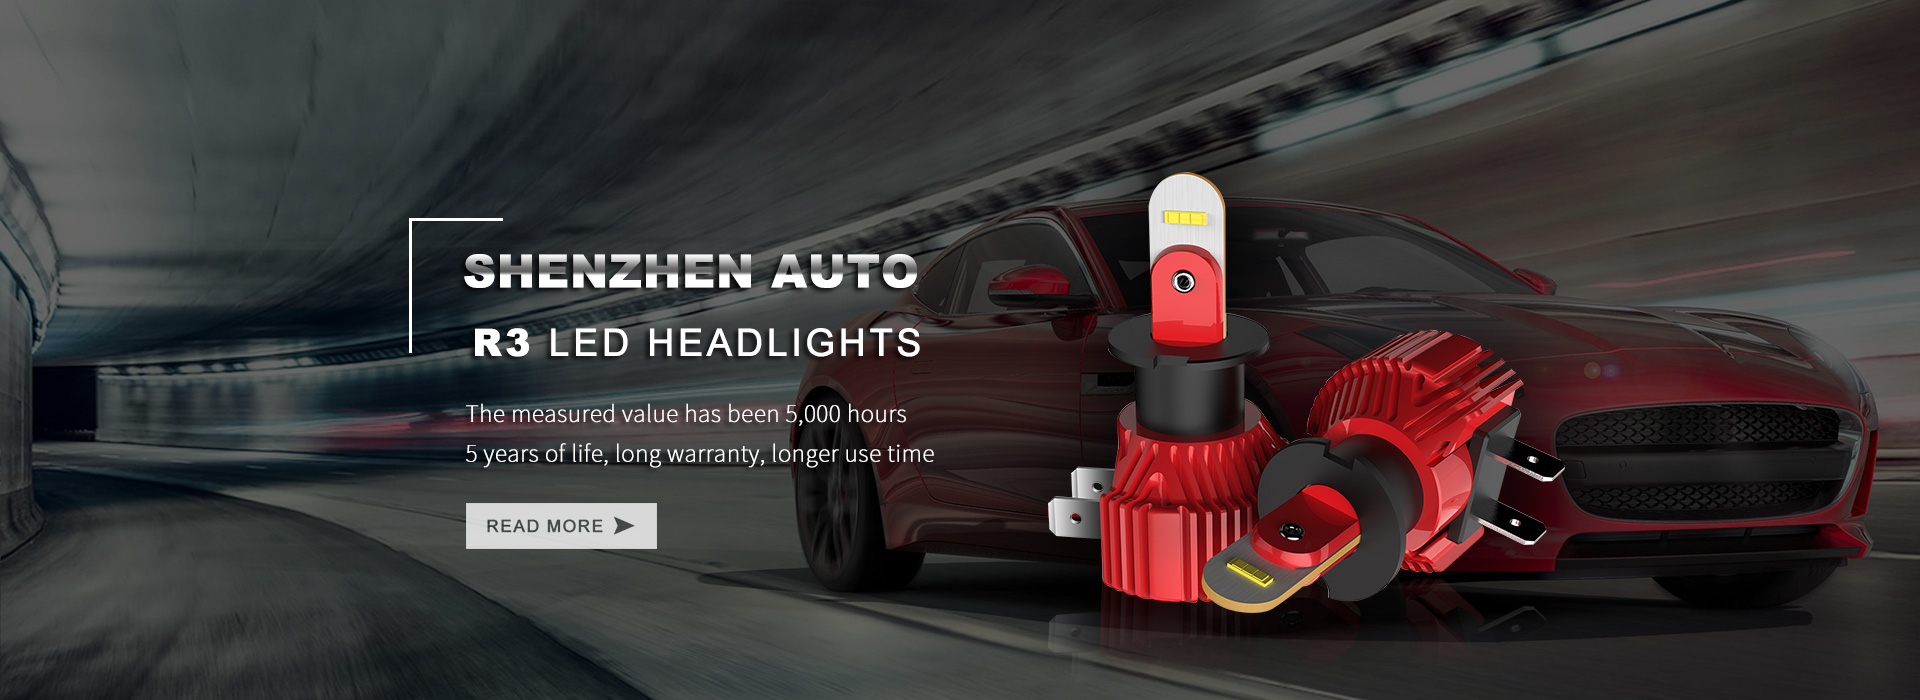 R3 Series Auto LED Headlight